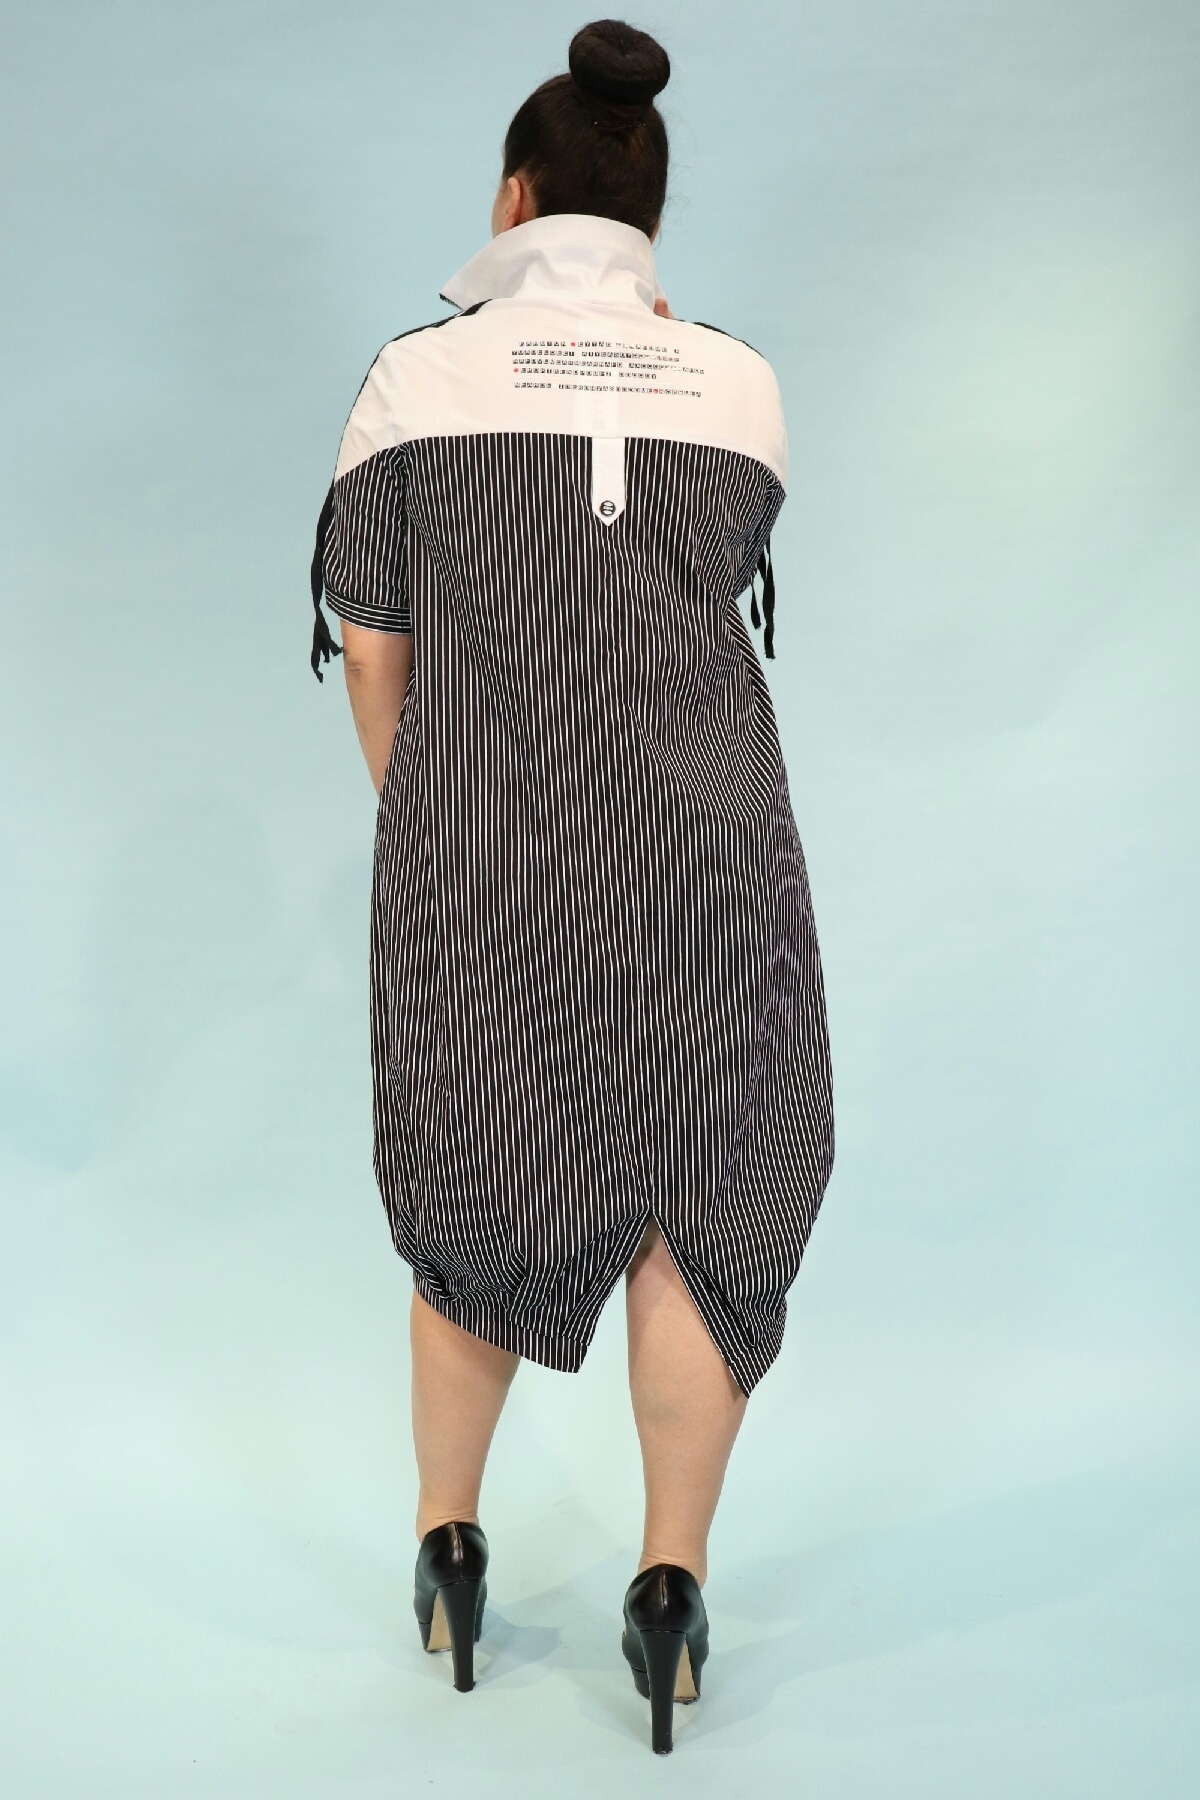 Striped, zipper  sport style dress with pockets